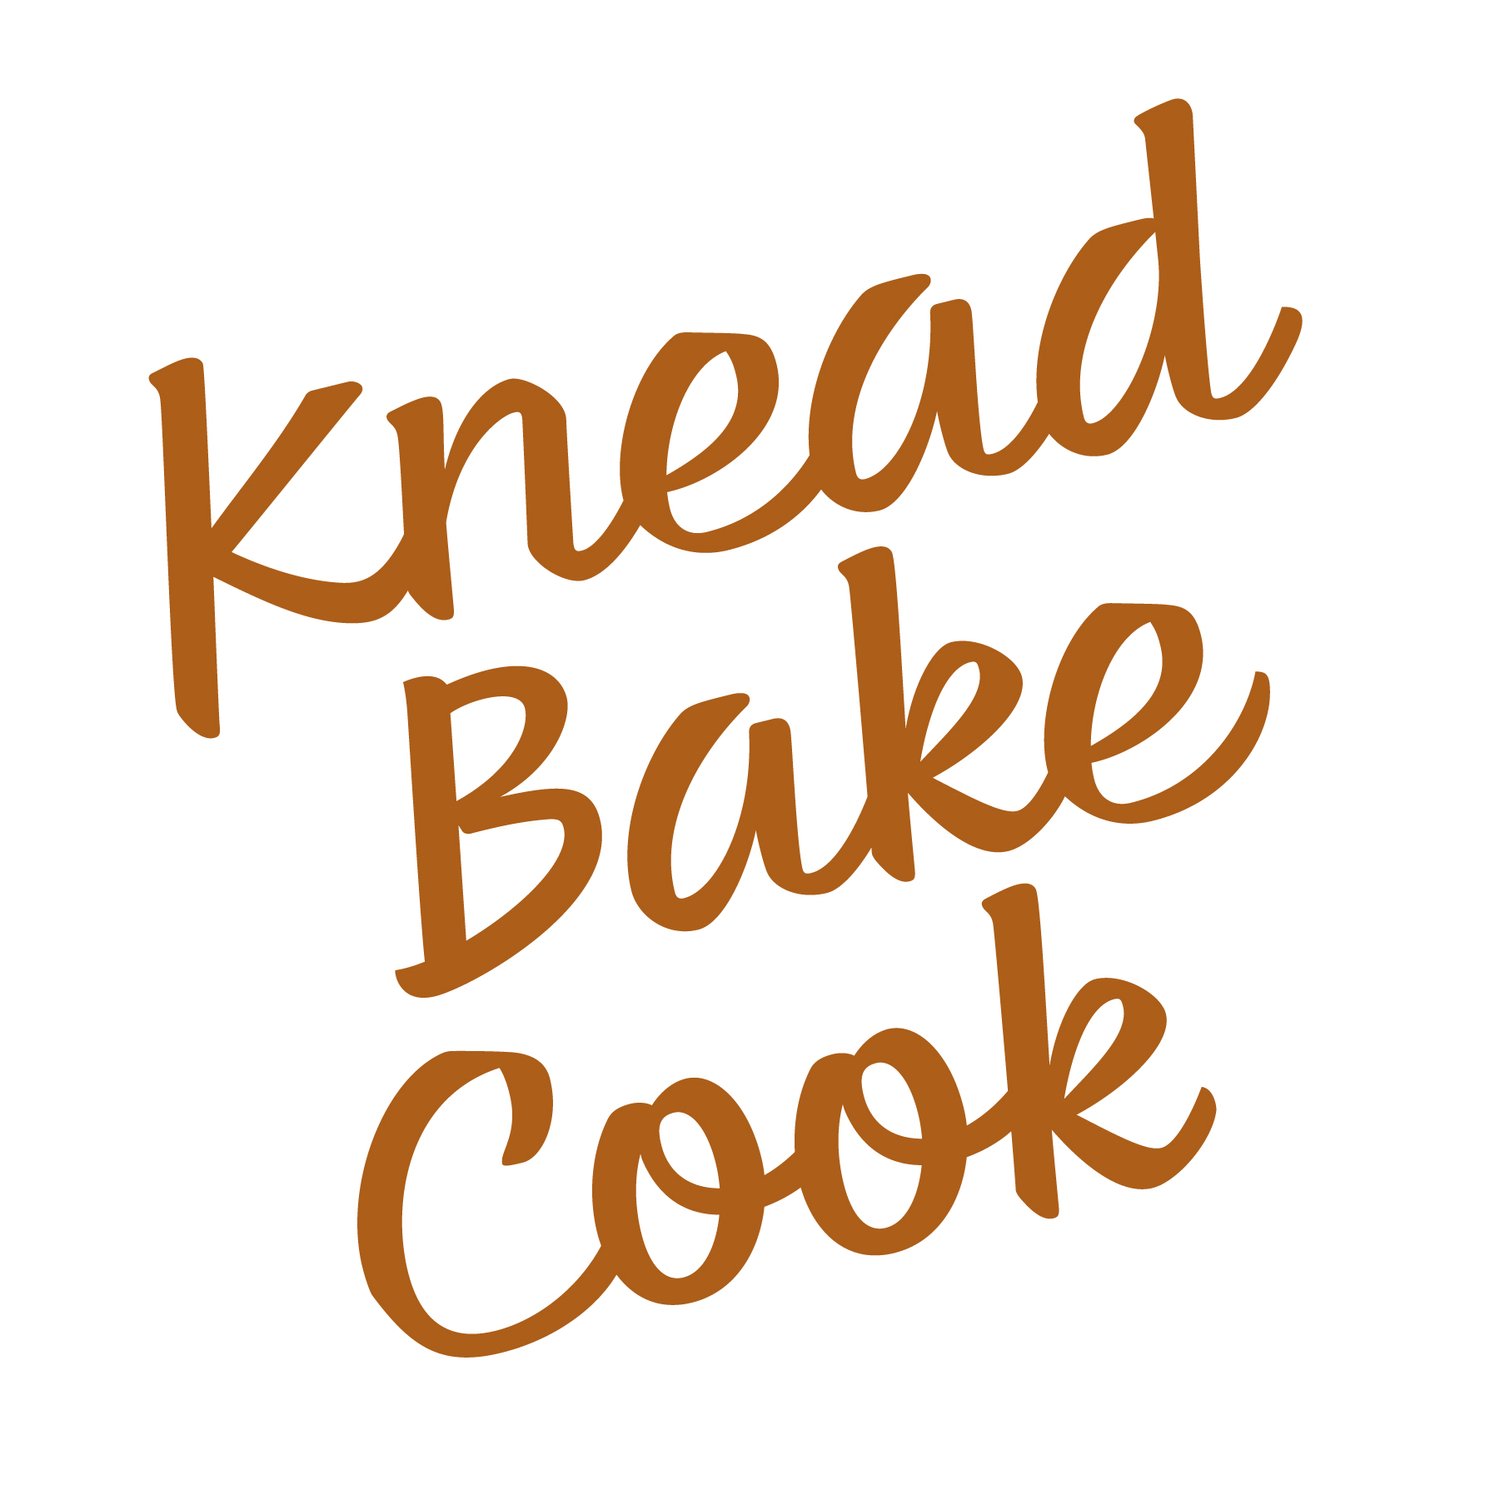    knead. bake. cook.